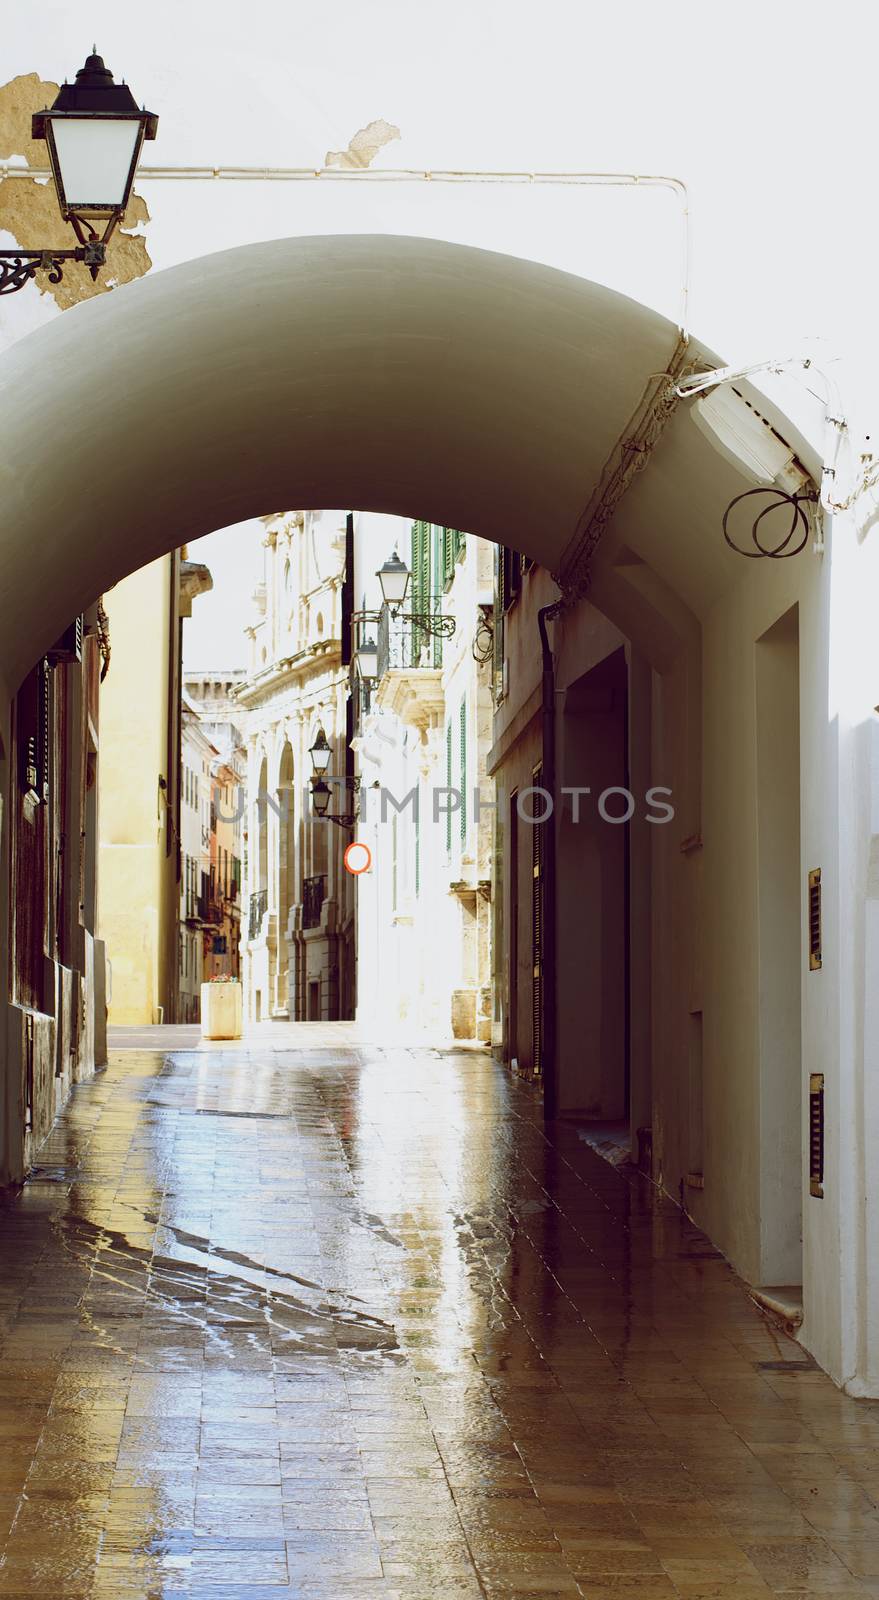 Entrance to Arch on Rainy Wet Cobblestone Street in Mahon, Menorca, Balearic Islands